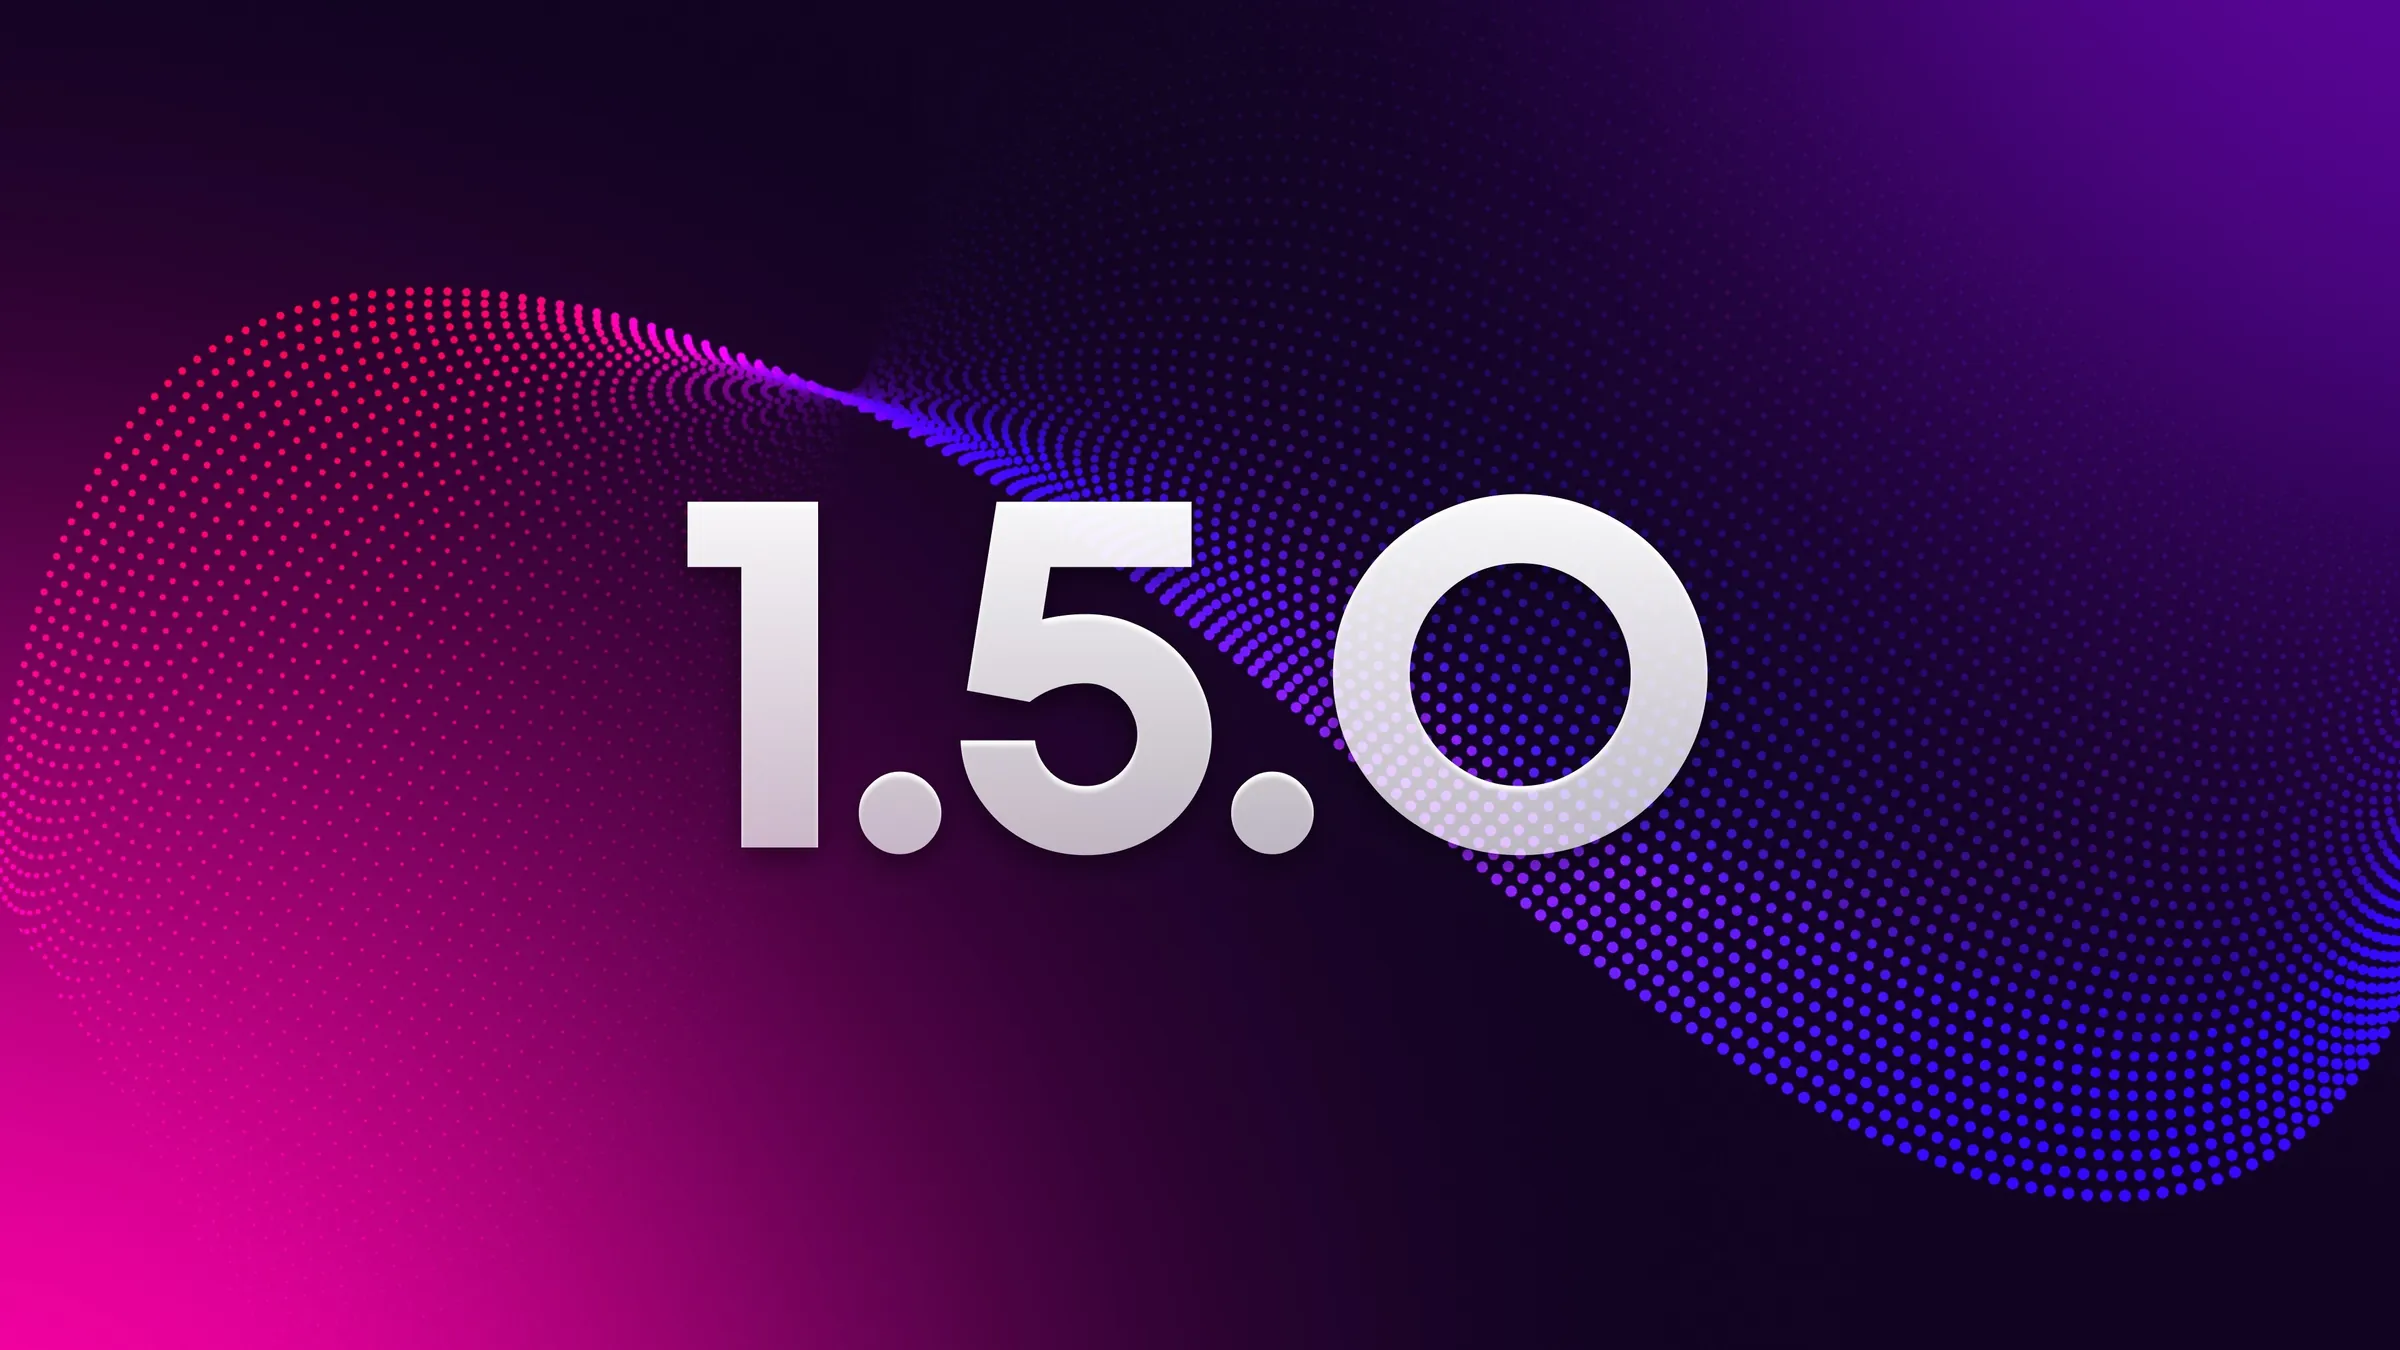 v1.5.0 is live!🎉